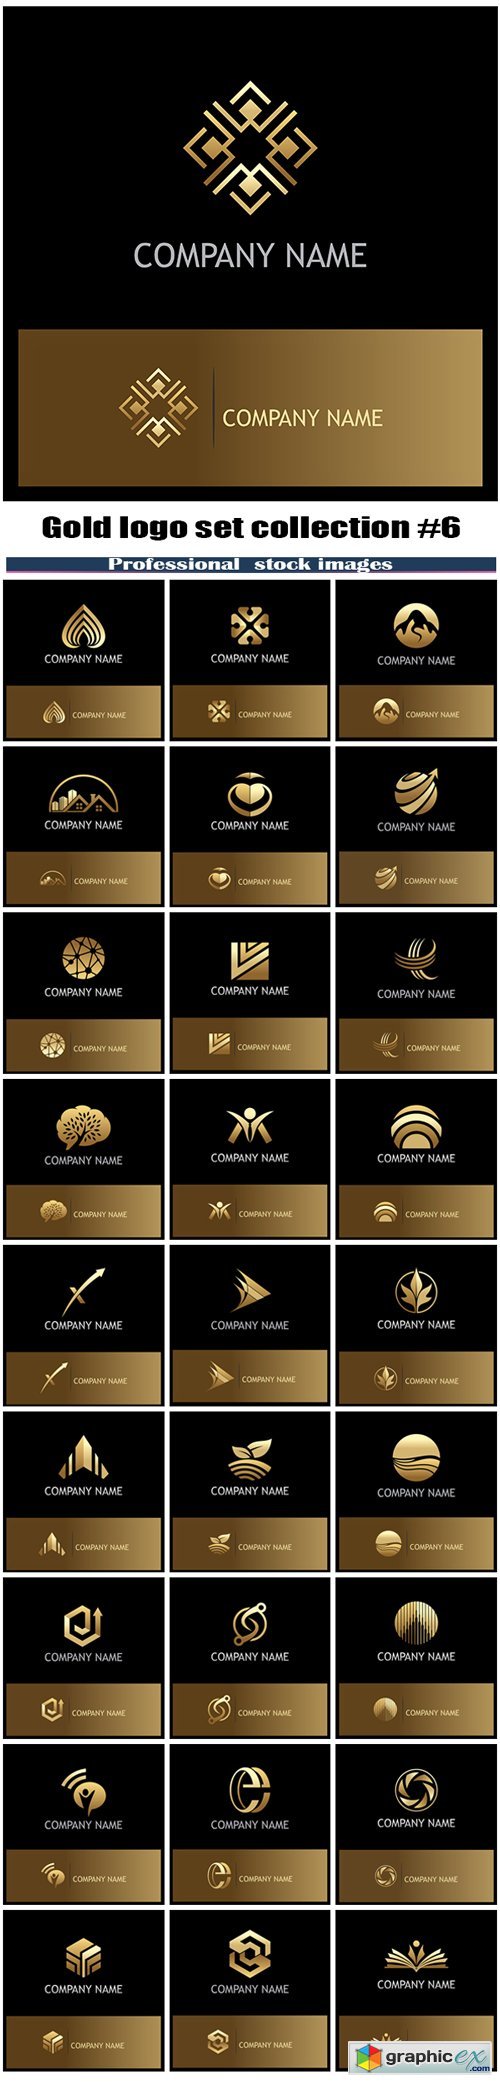 Gold logo set collection #6